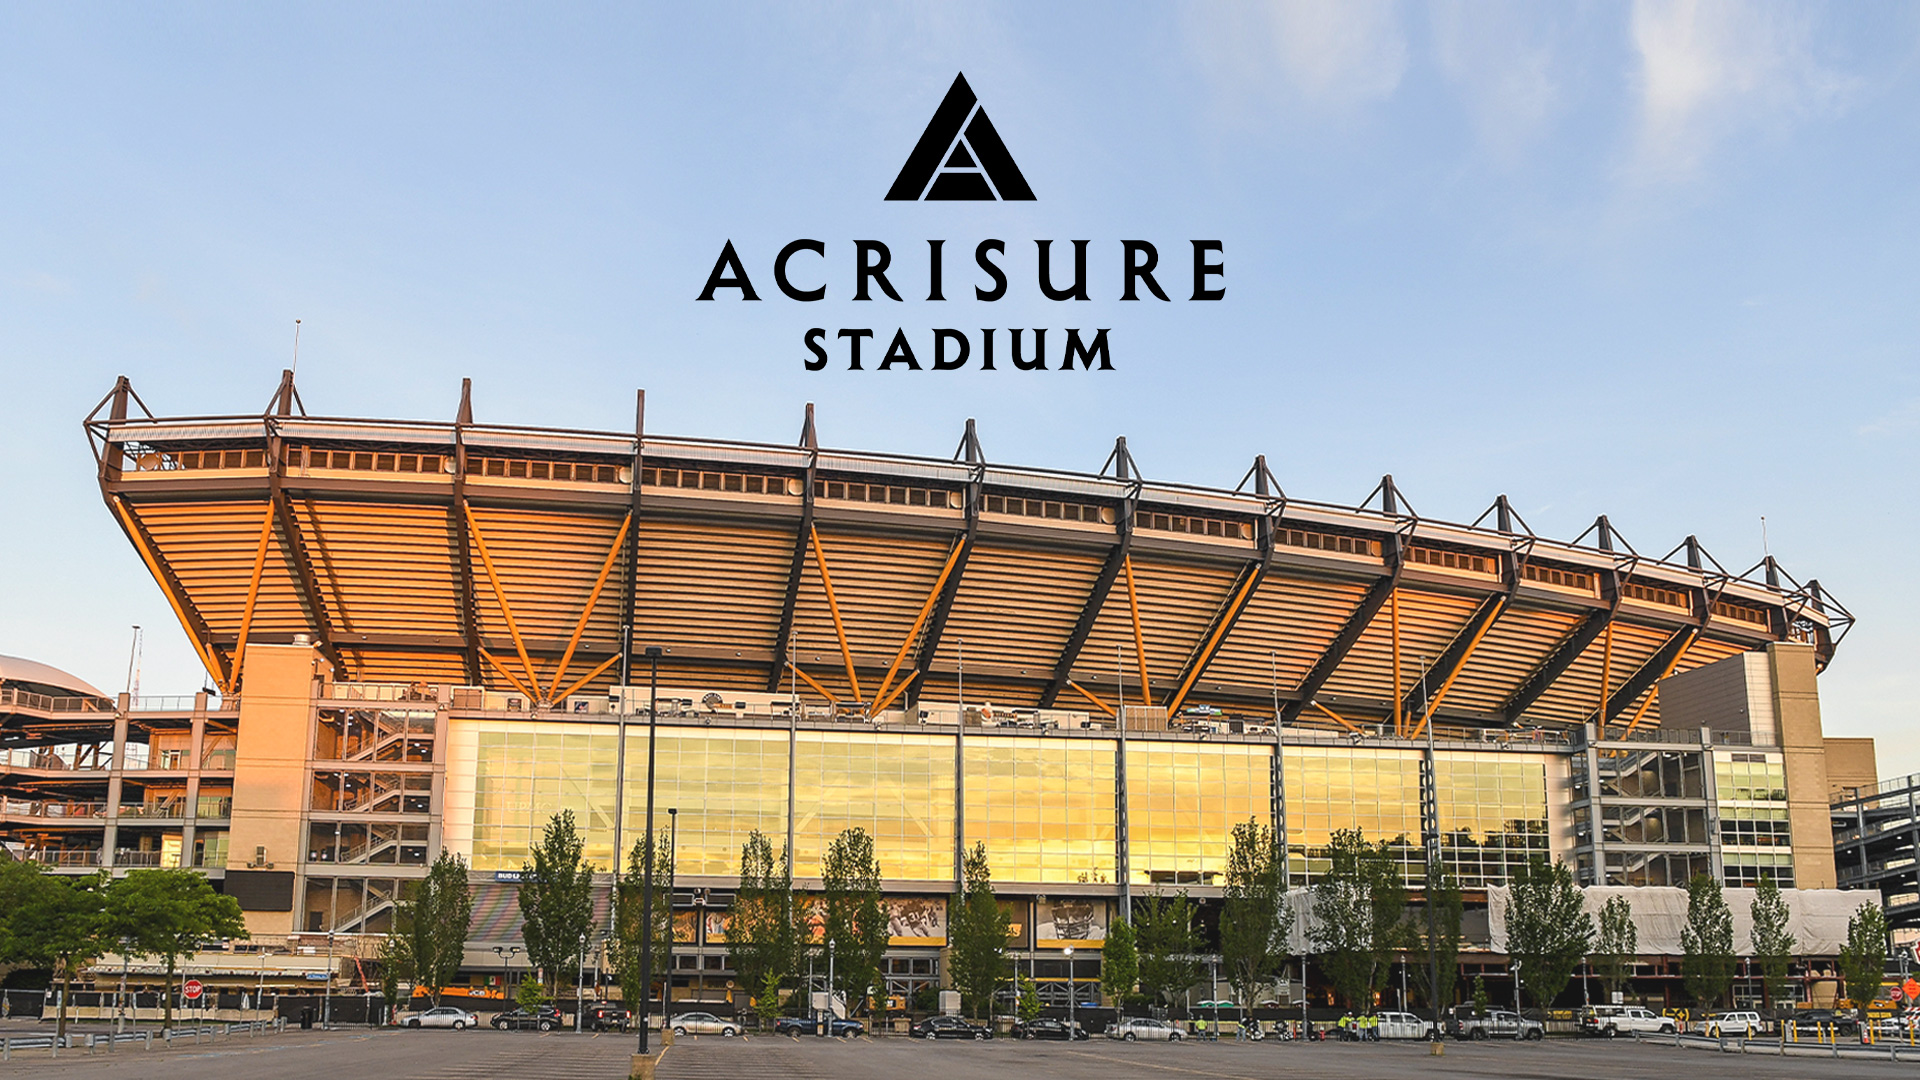 Exterior of Acrisure Stadium (formerly Heinz Field) with the Acrisure Stadium logo